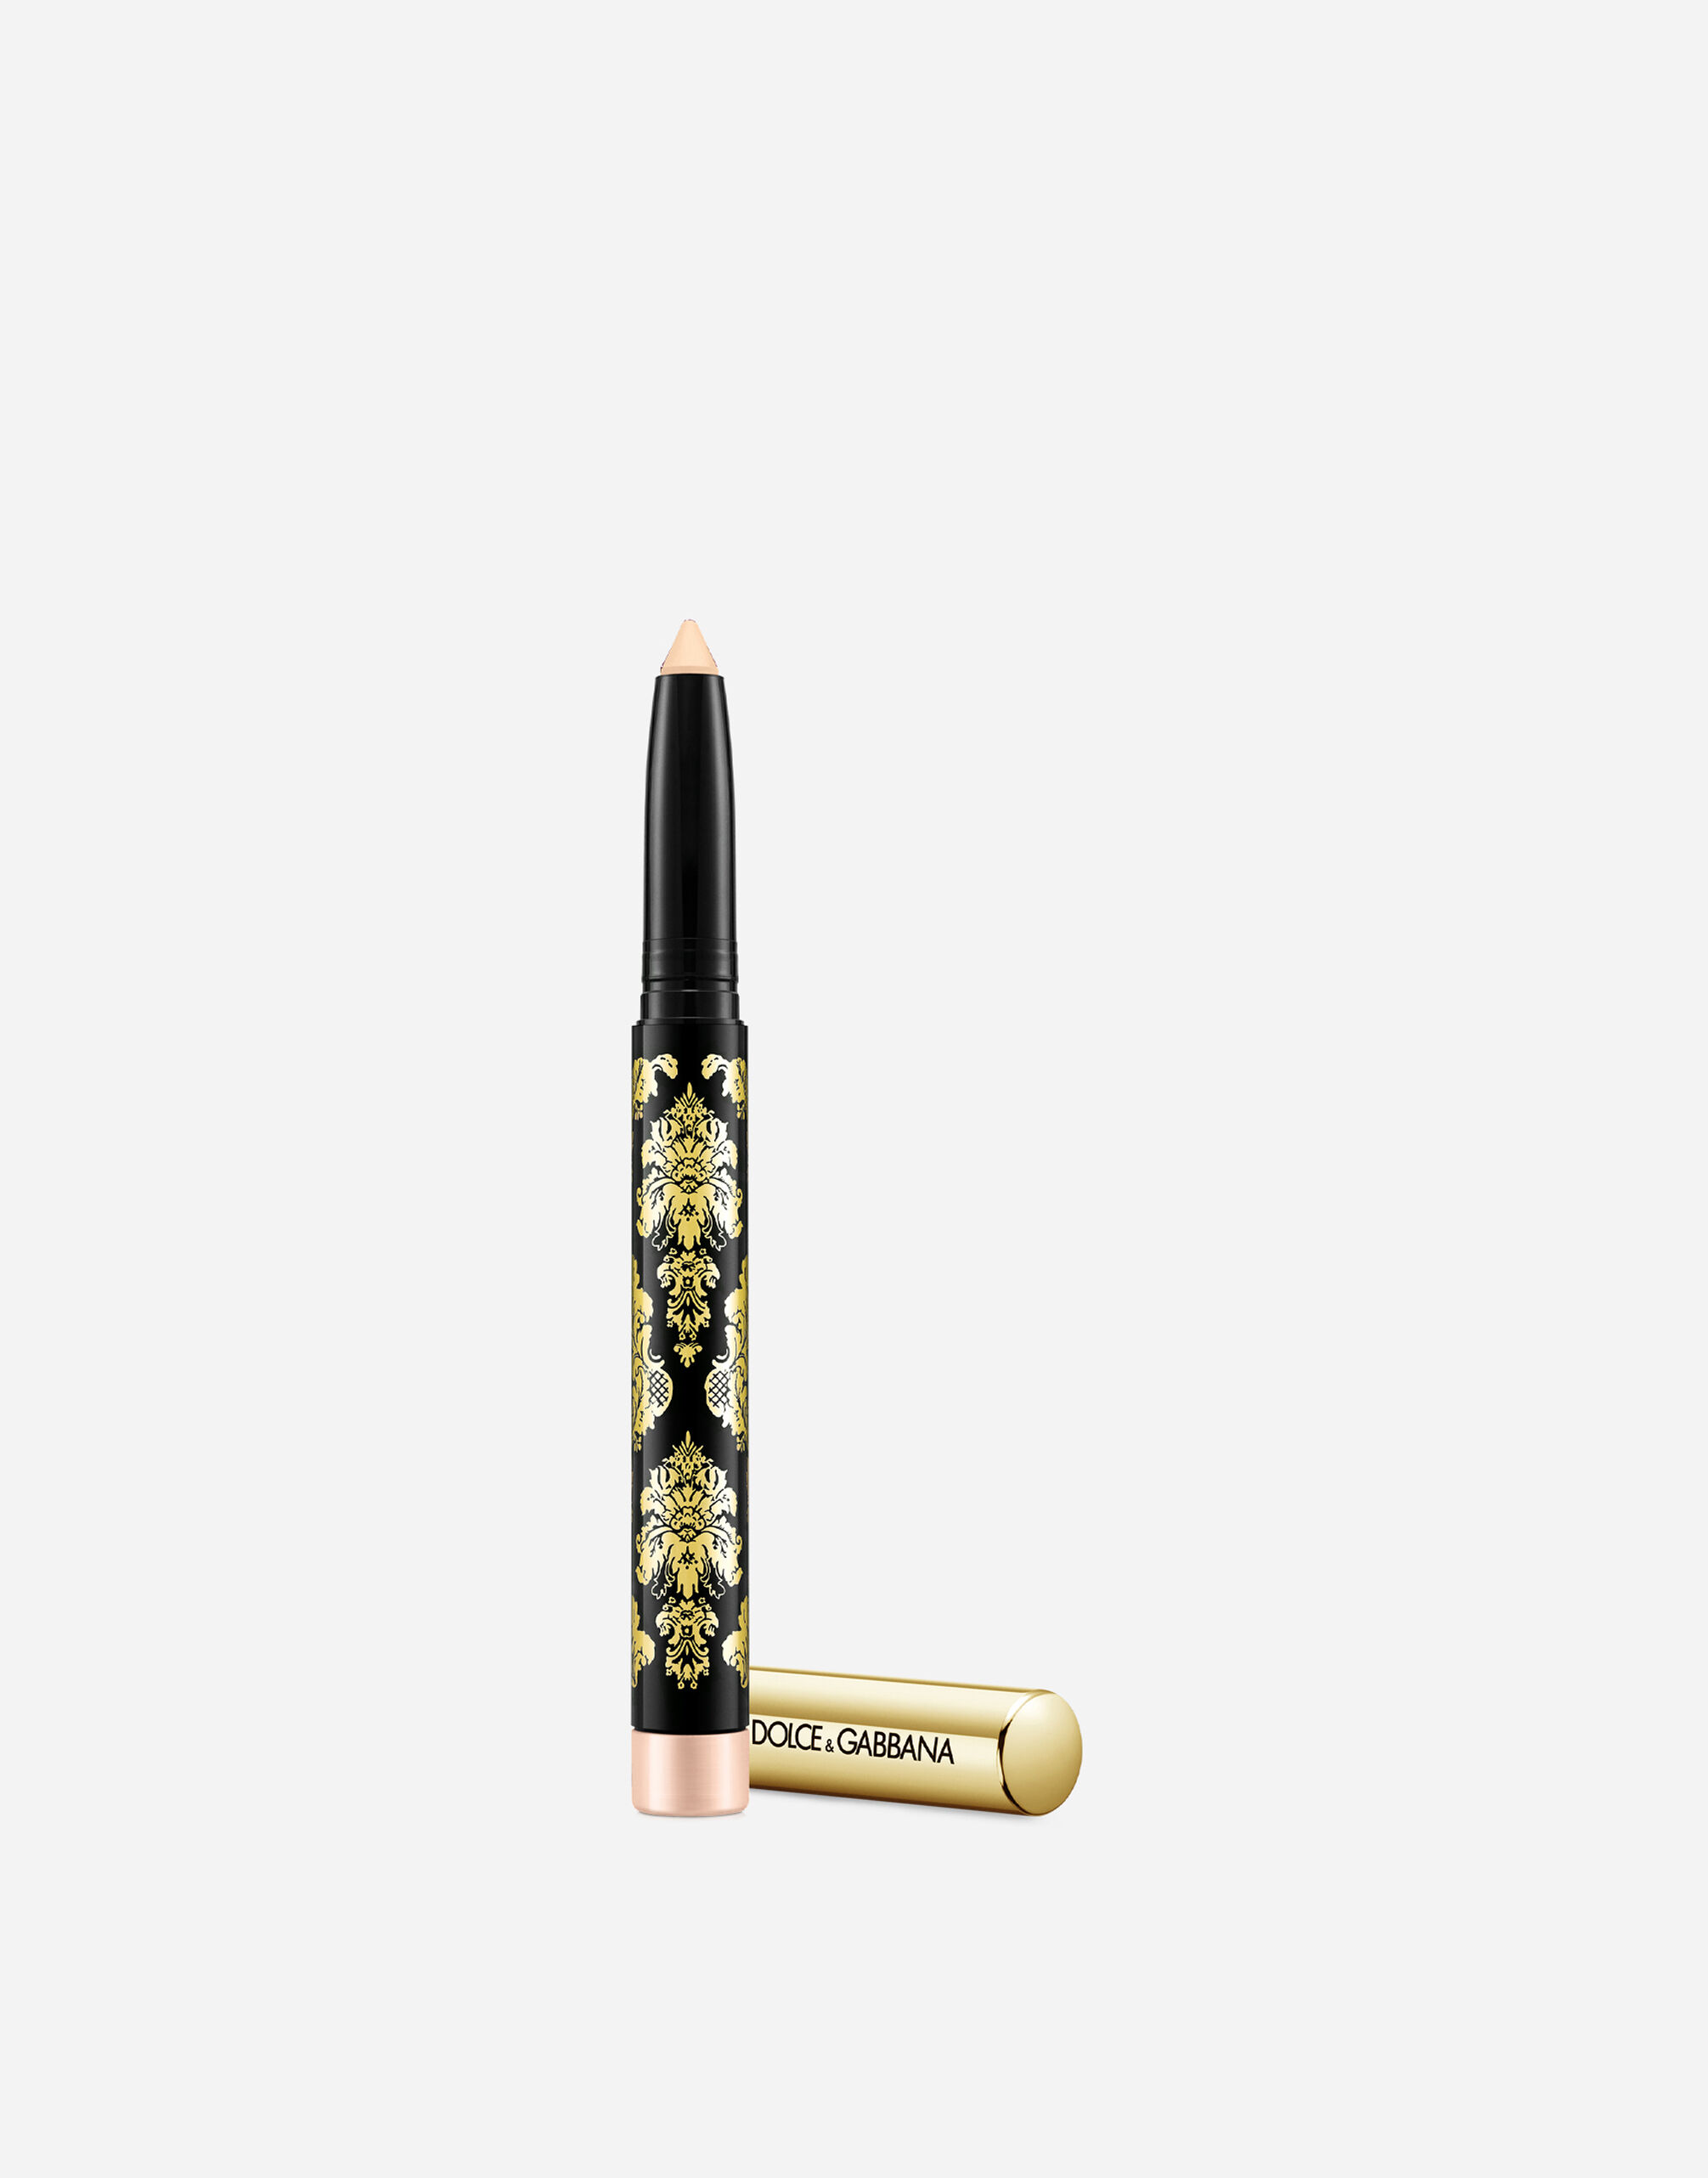 Тени-карандаш для глаз Dolce & Gabbana Intenseyes кремовые, №2 Nude, 1,4 г тени для глаз кремовые influence beauty alien тон 01 5 г